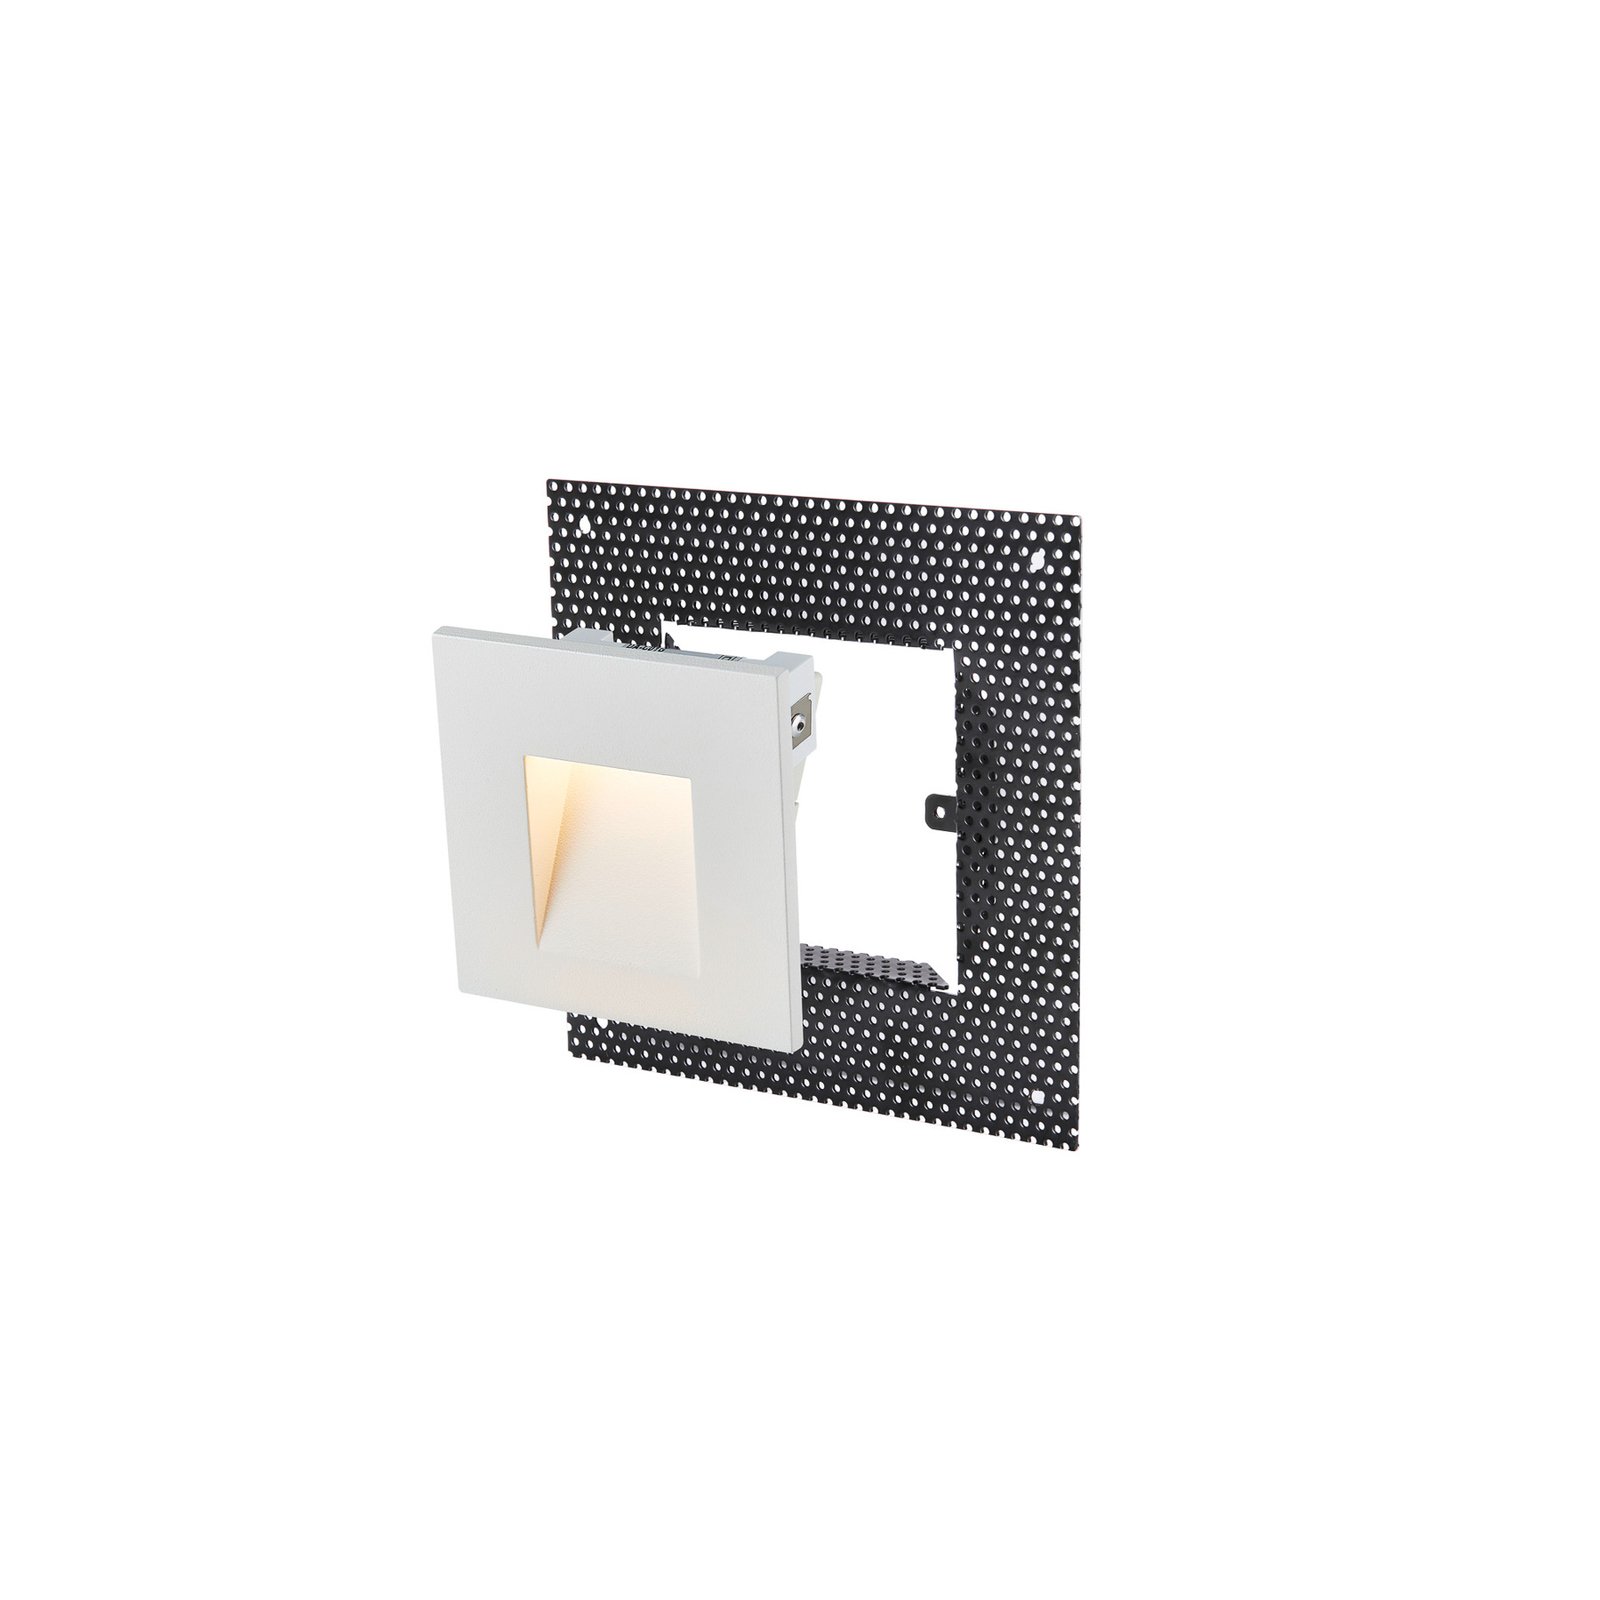 SLV LED recessed wall light Mobala, white, aluminium, 3,000 K